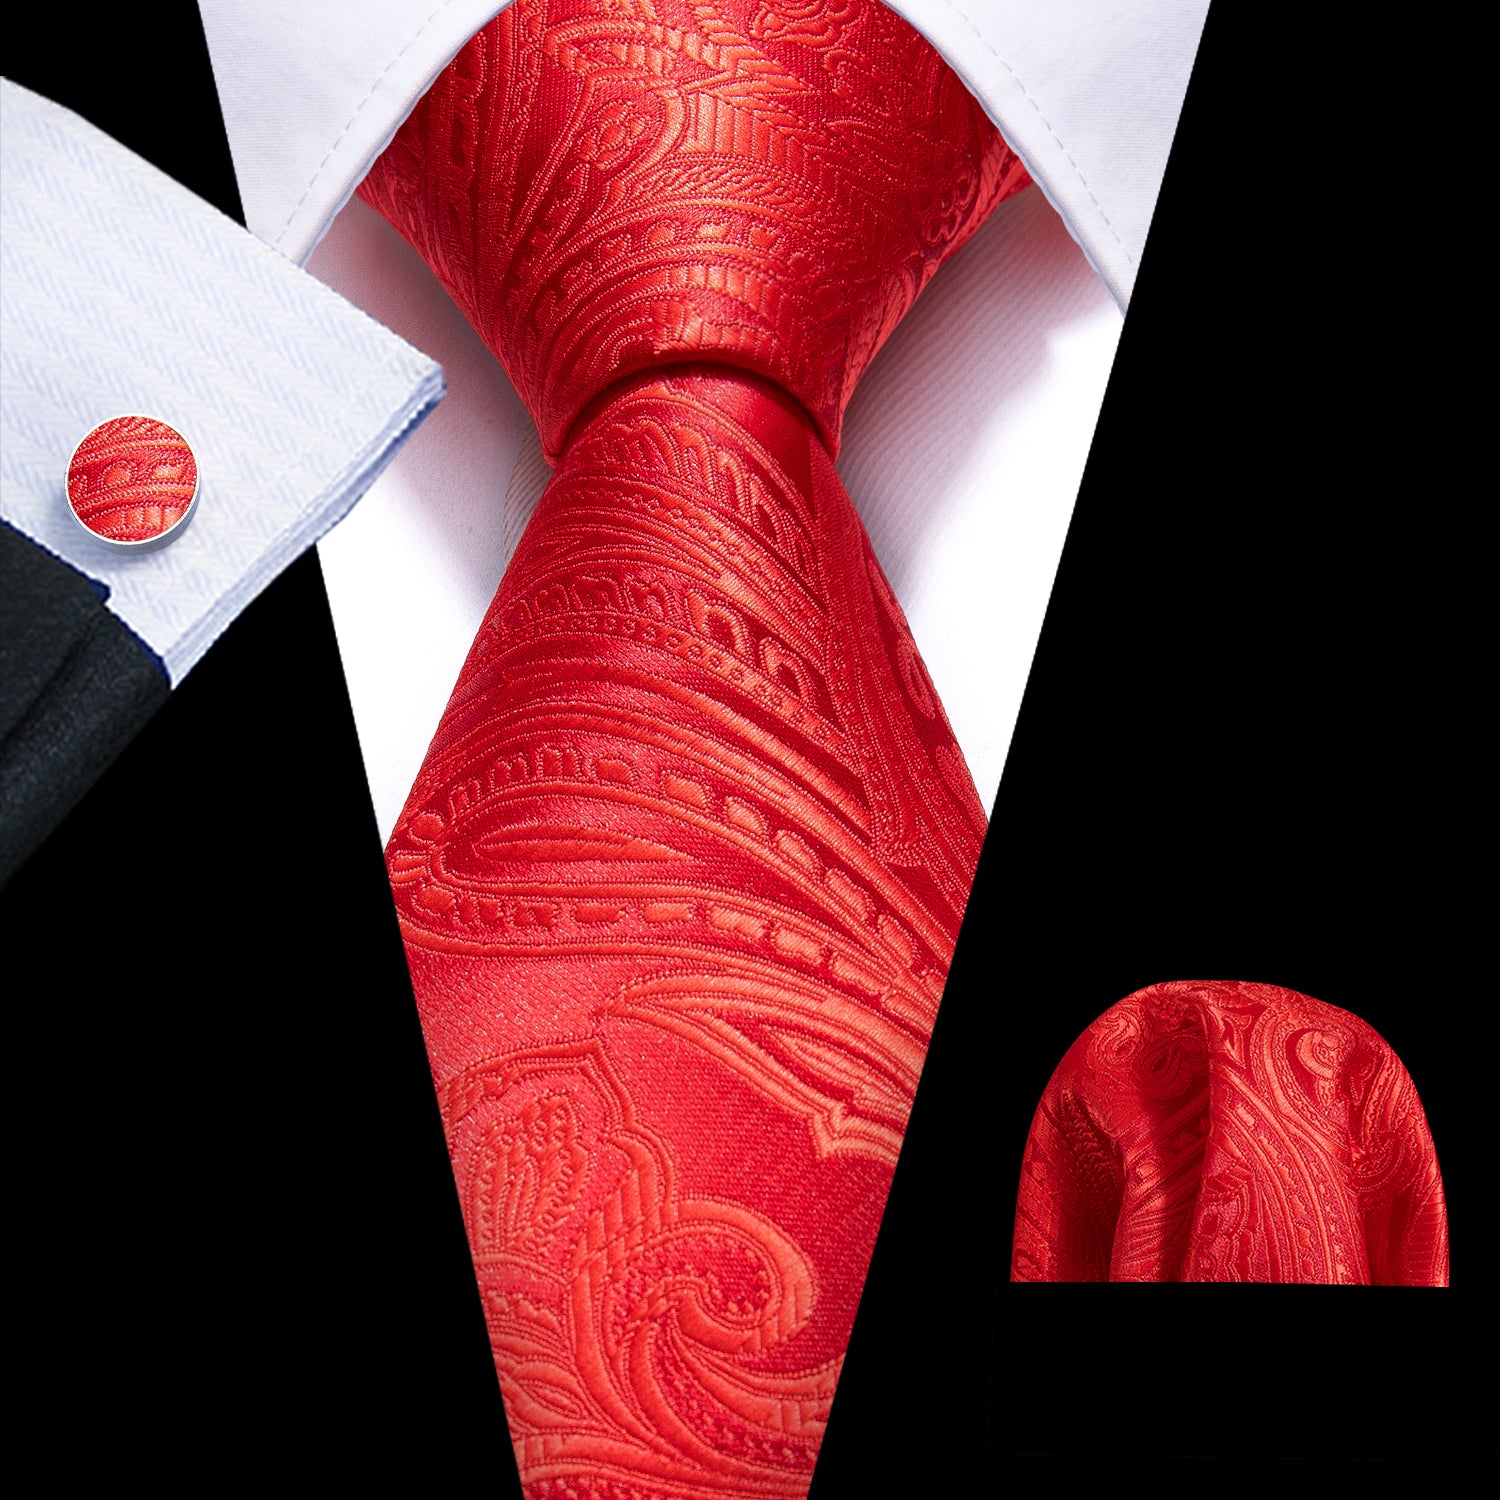 Red Paisley Silk Tie Hanky Cufflinks Set